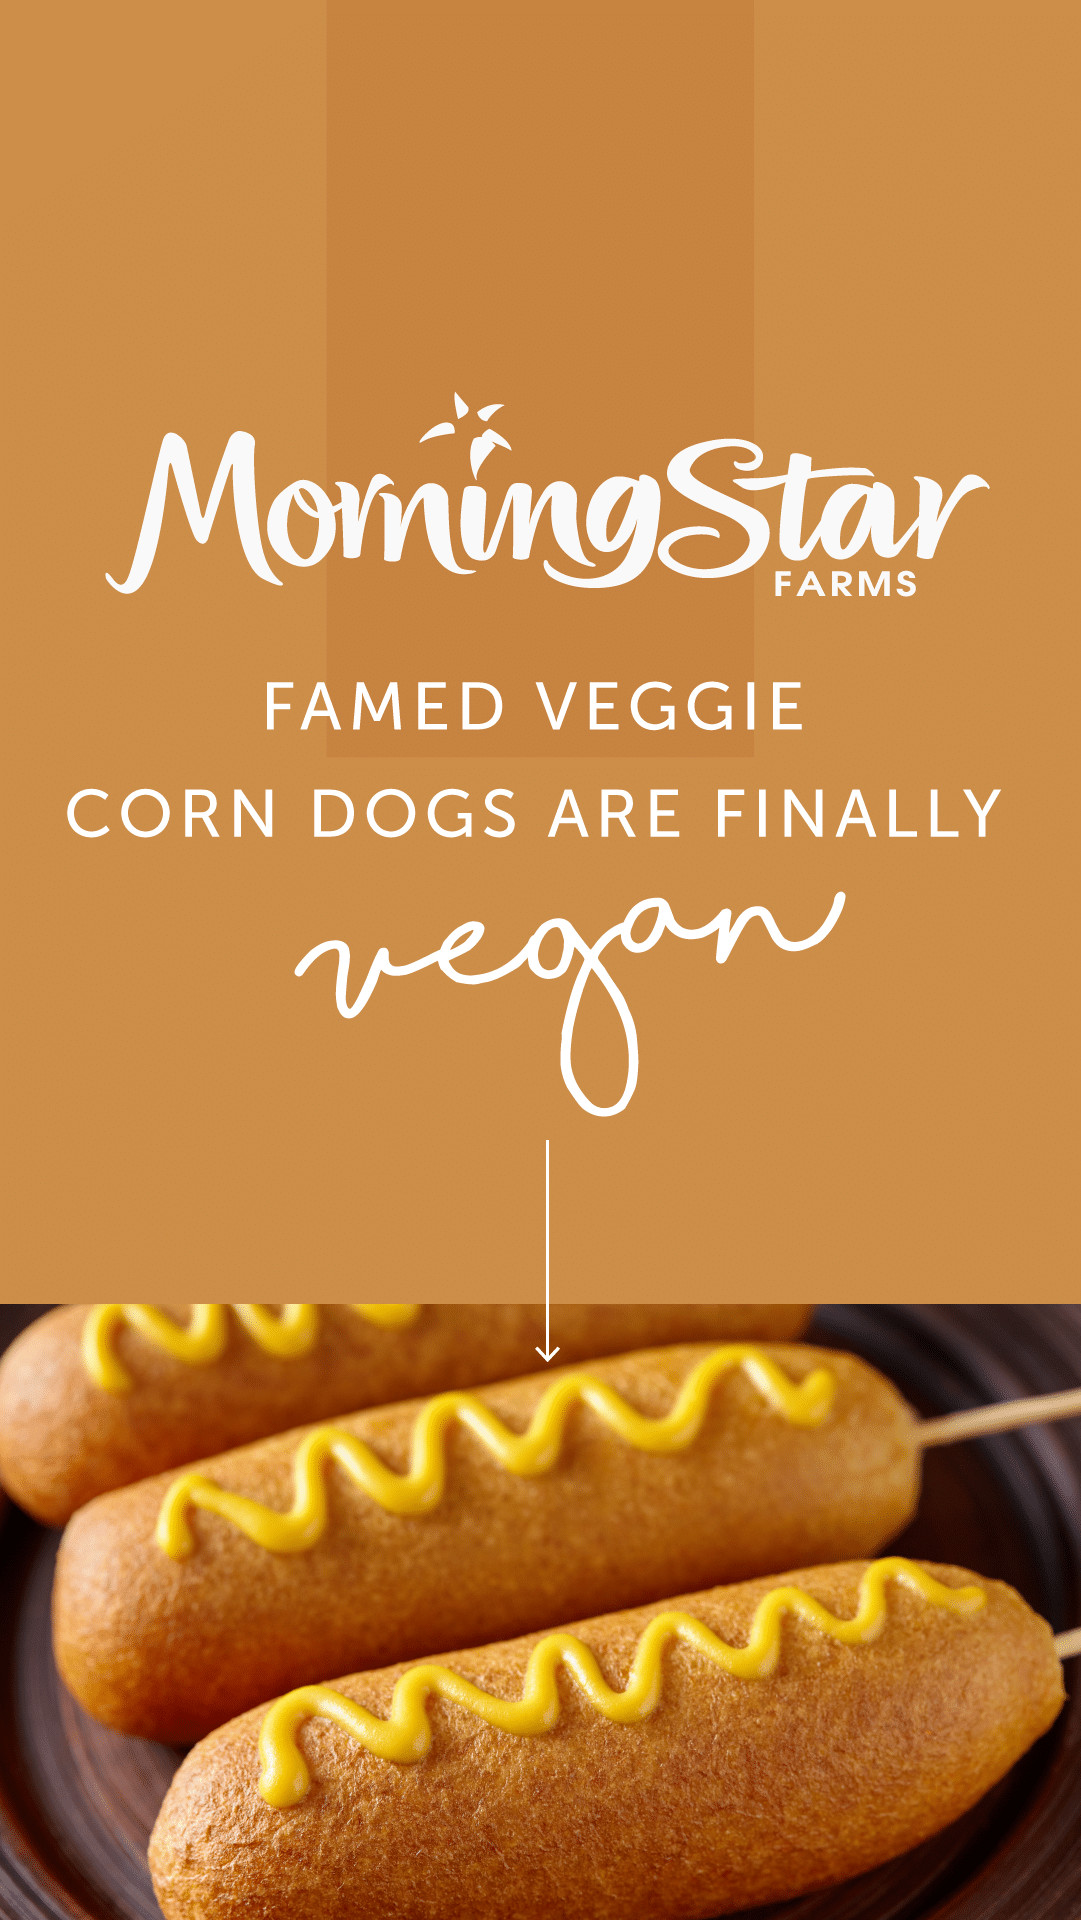 Veggie Corn Dogs
 MorningStar Farms’ Famed Veggie Corn Dogs Are Finally Vegan